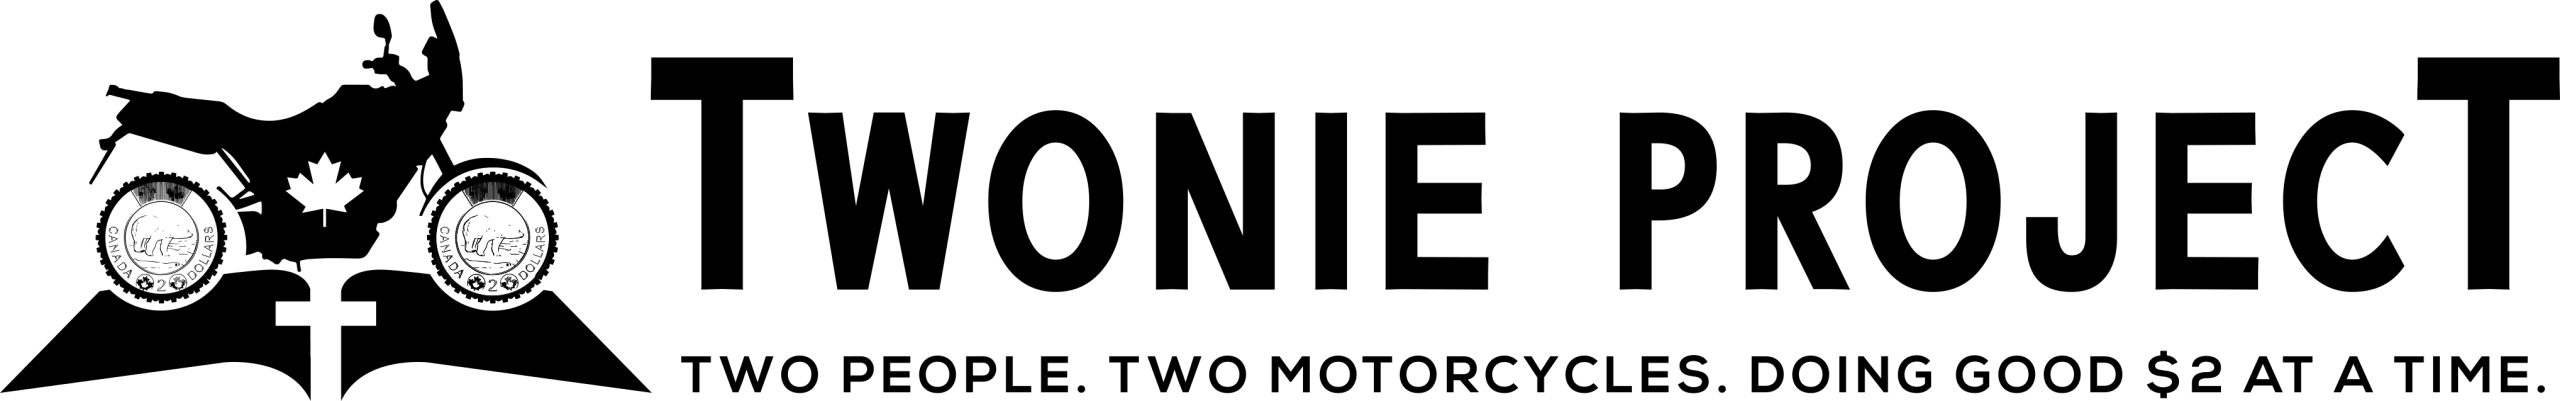 Twonie Project motorcycle trip